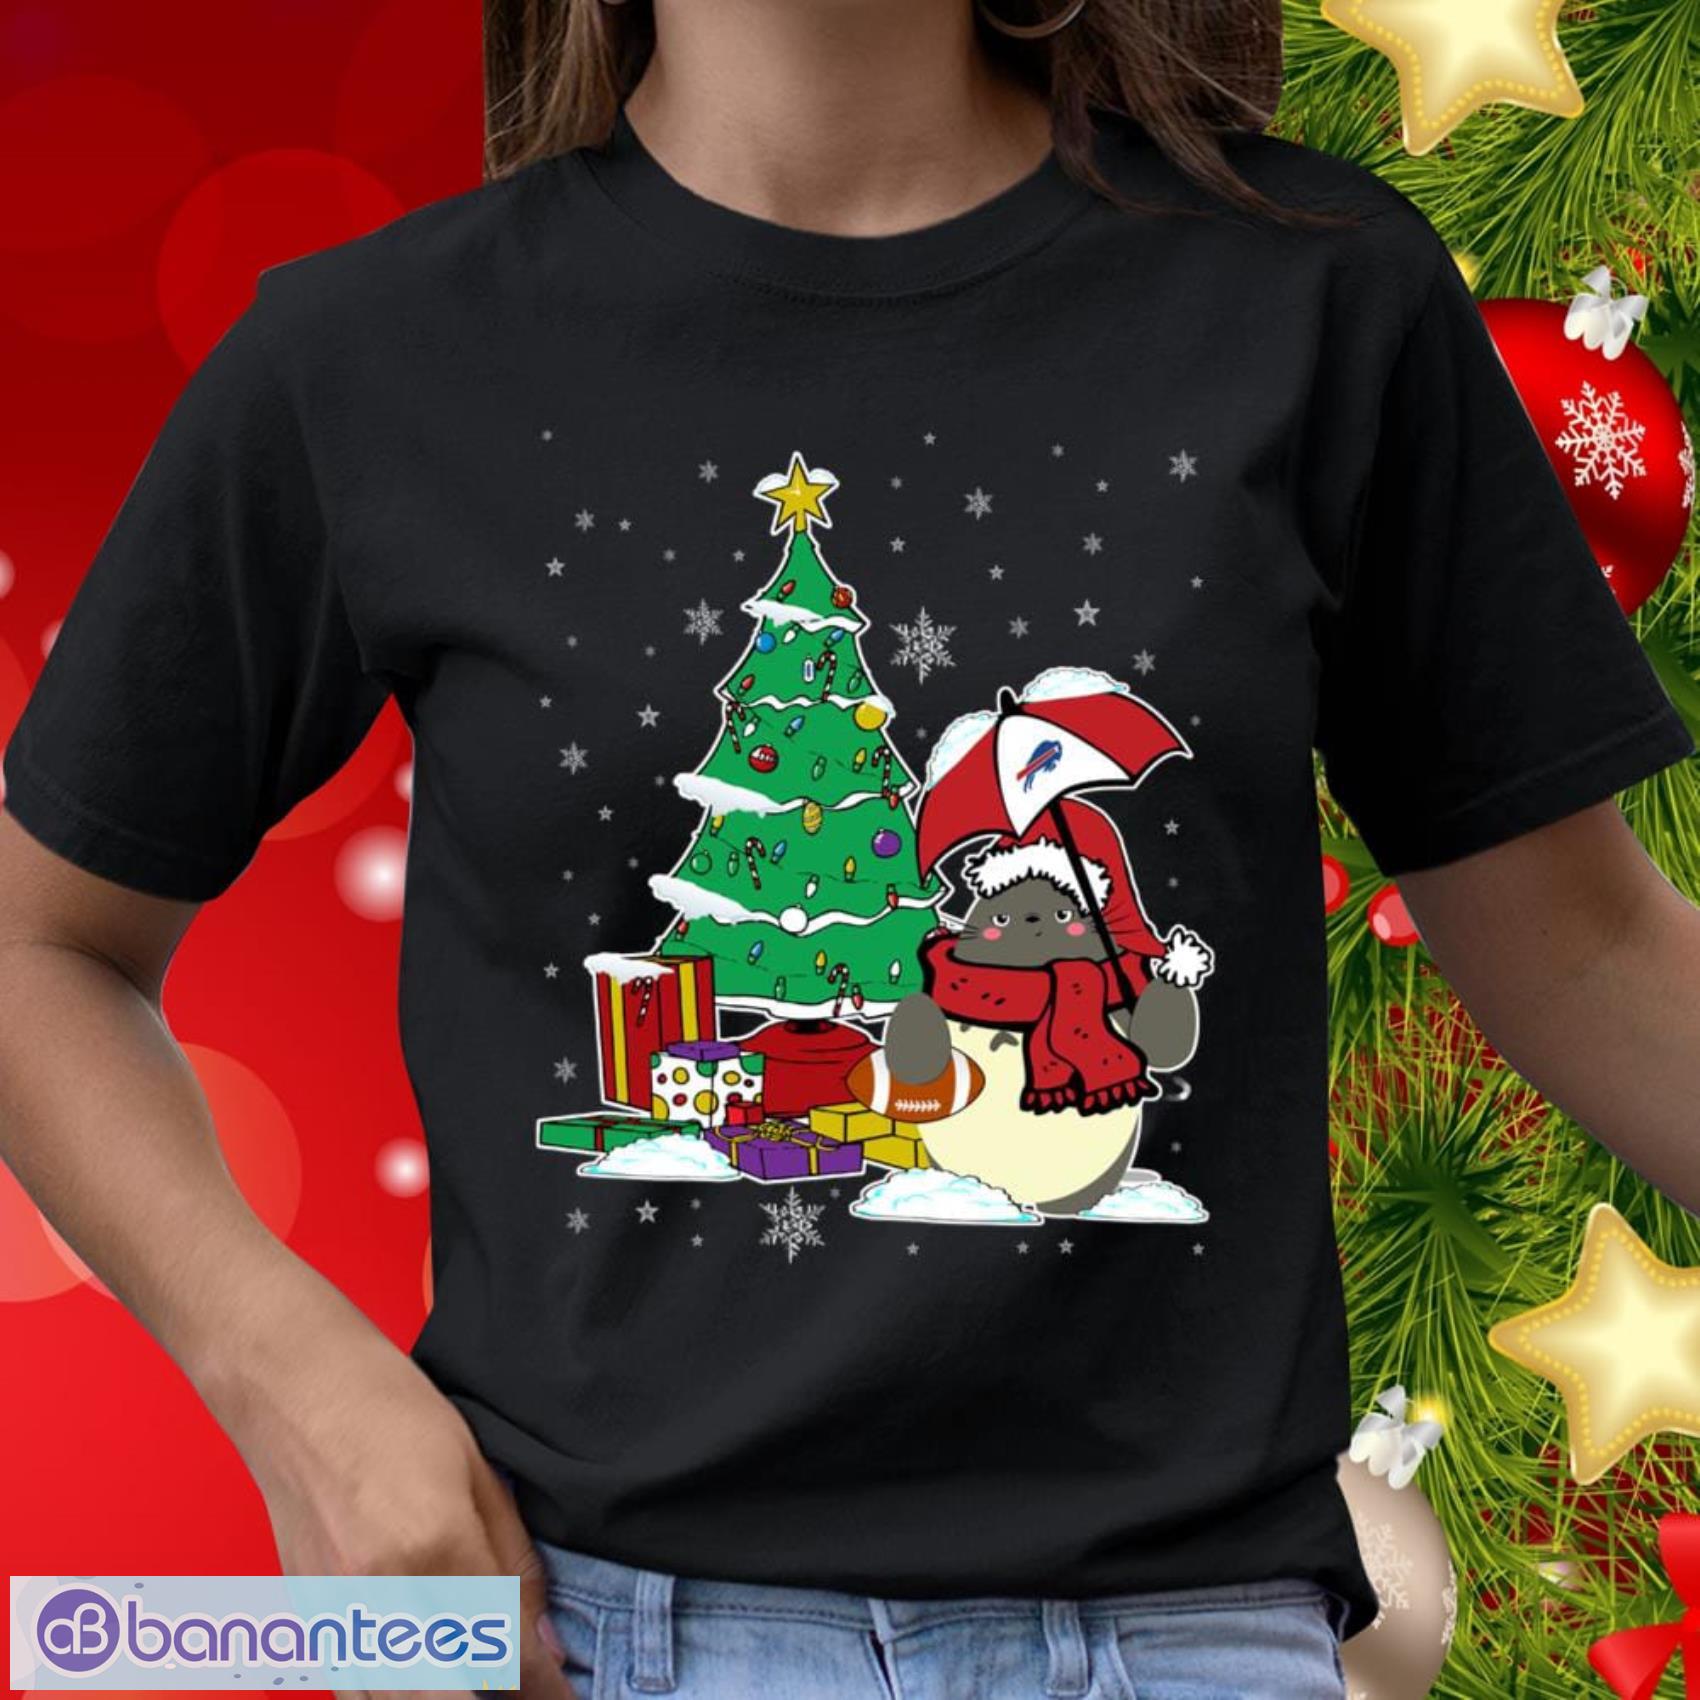 Buffalo Bills NFL Football Gift Fr Fans Cute Tonari No Totoro Christmas Sports T Shirt - Buffalo Bills NFL Football Cute Tonari No Totoro Christmas Sports T Shirt_2